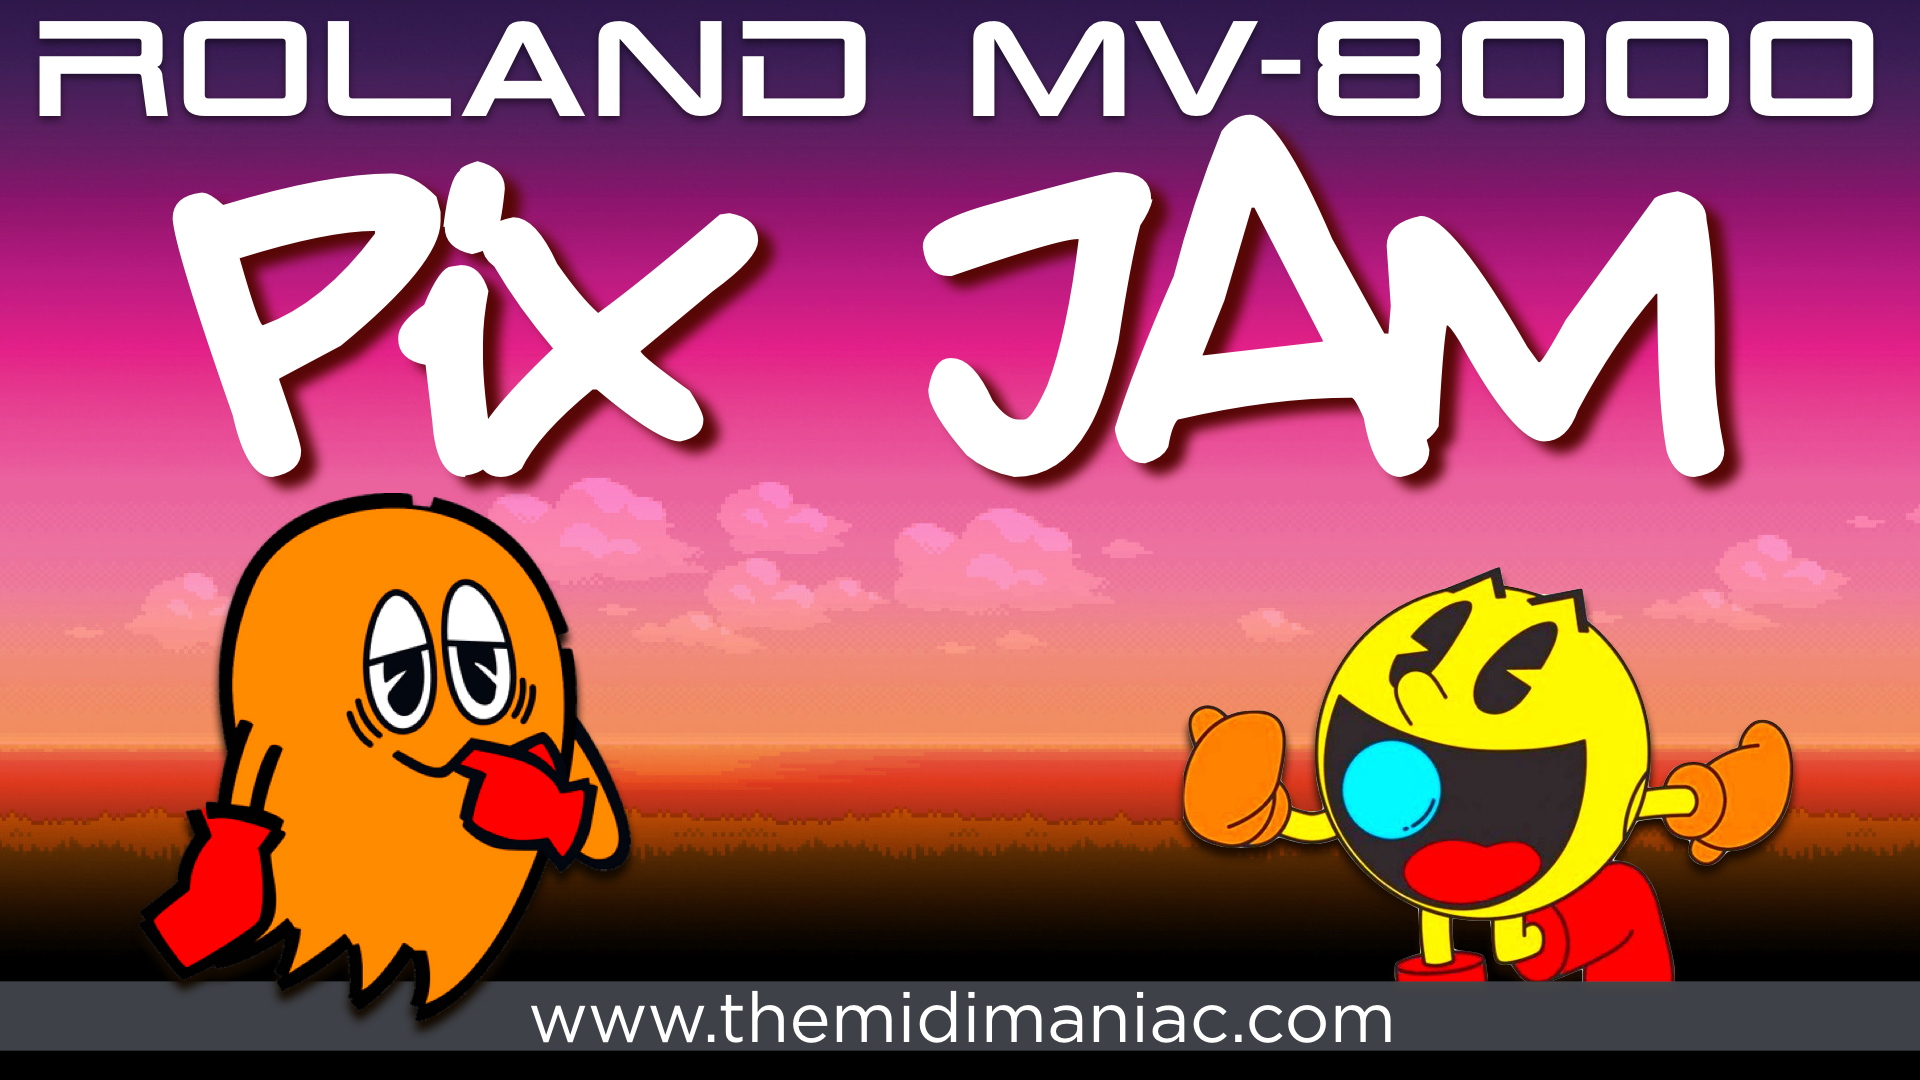 Pix Jam Roland MV-8000